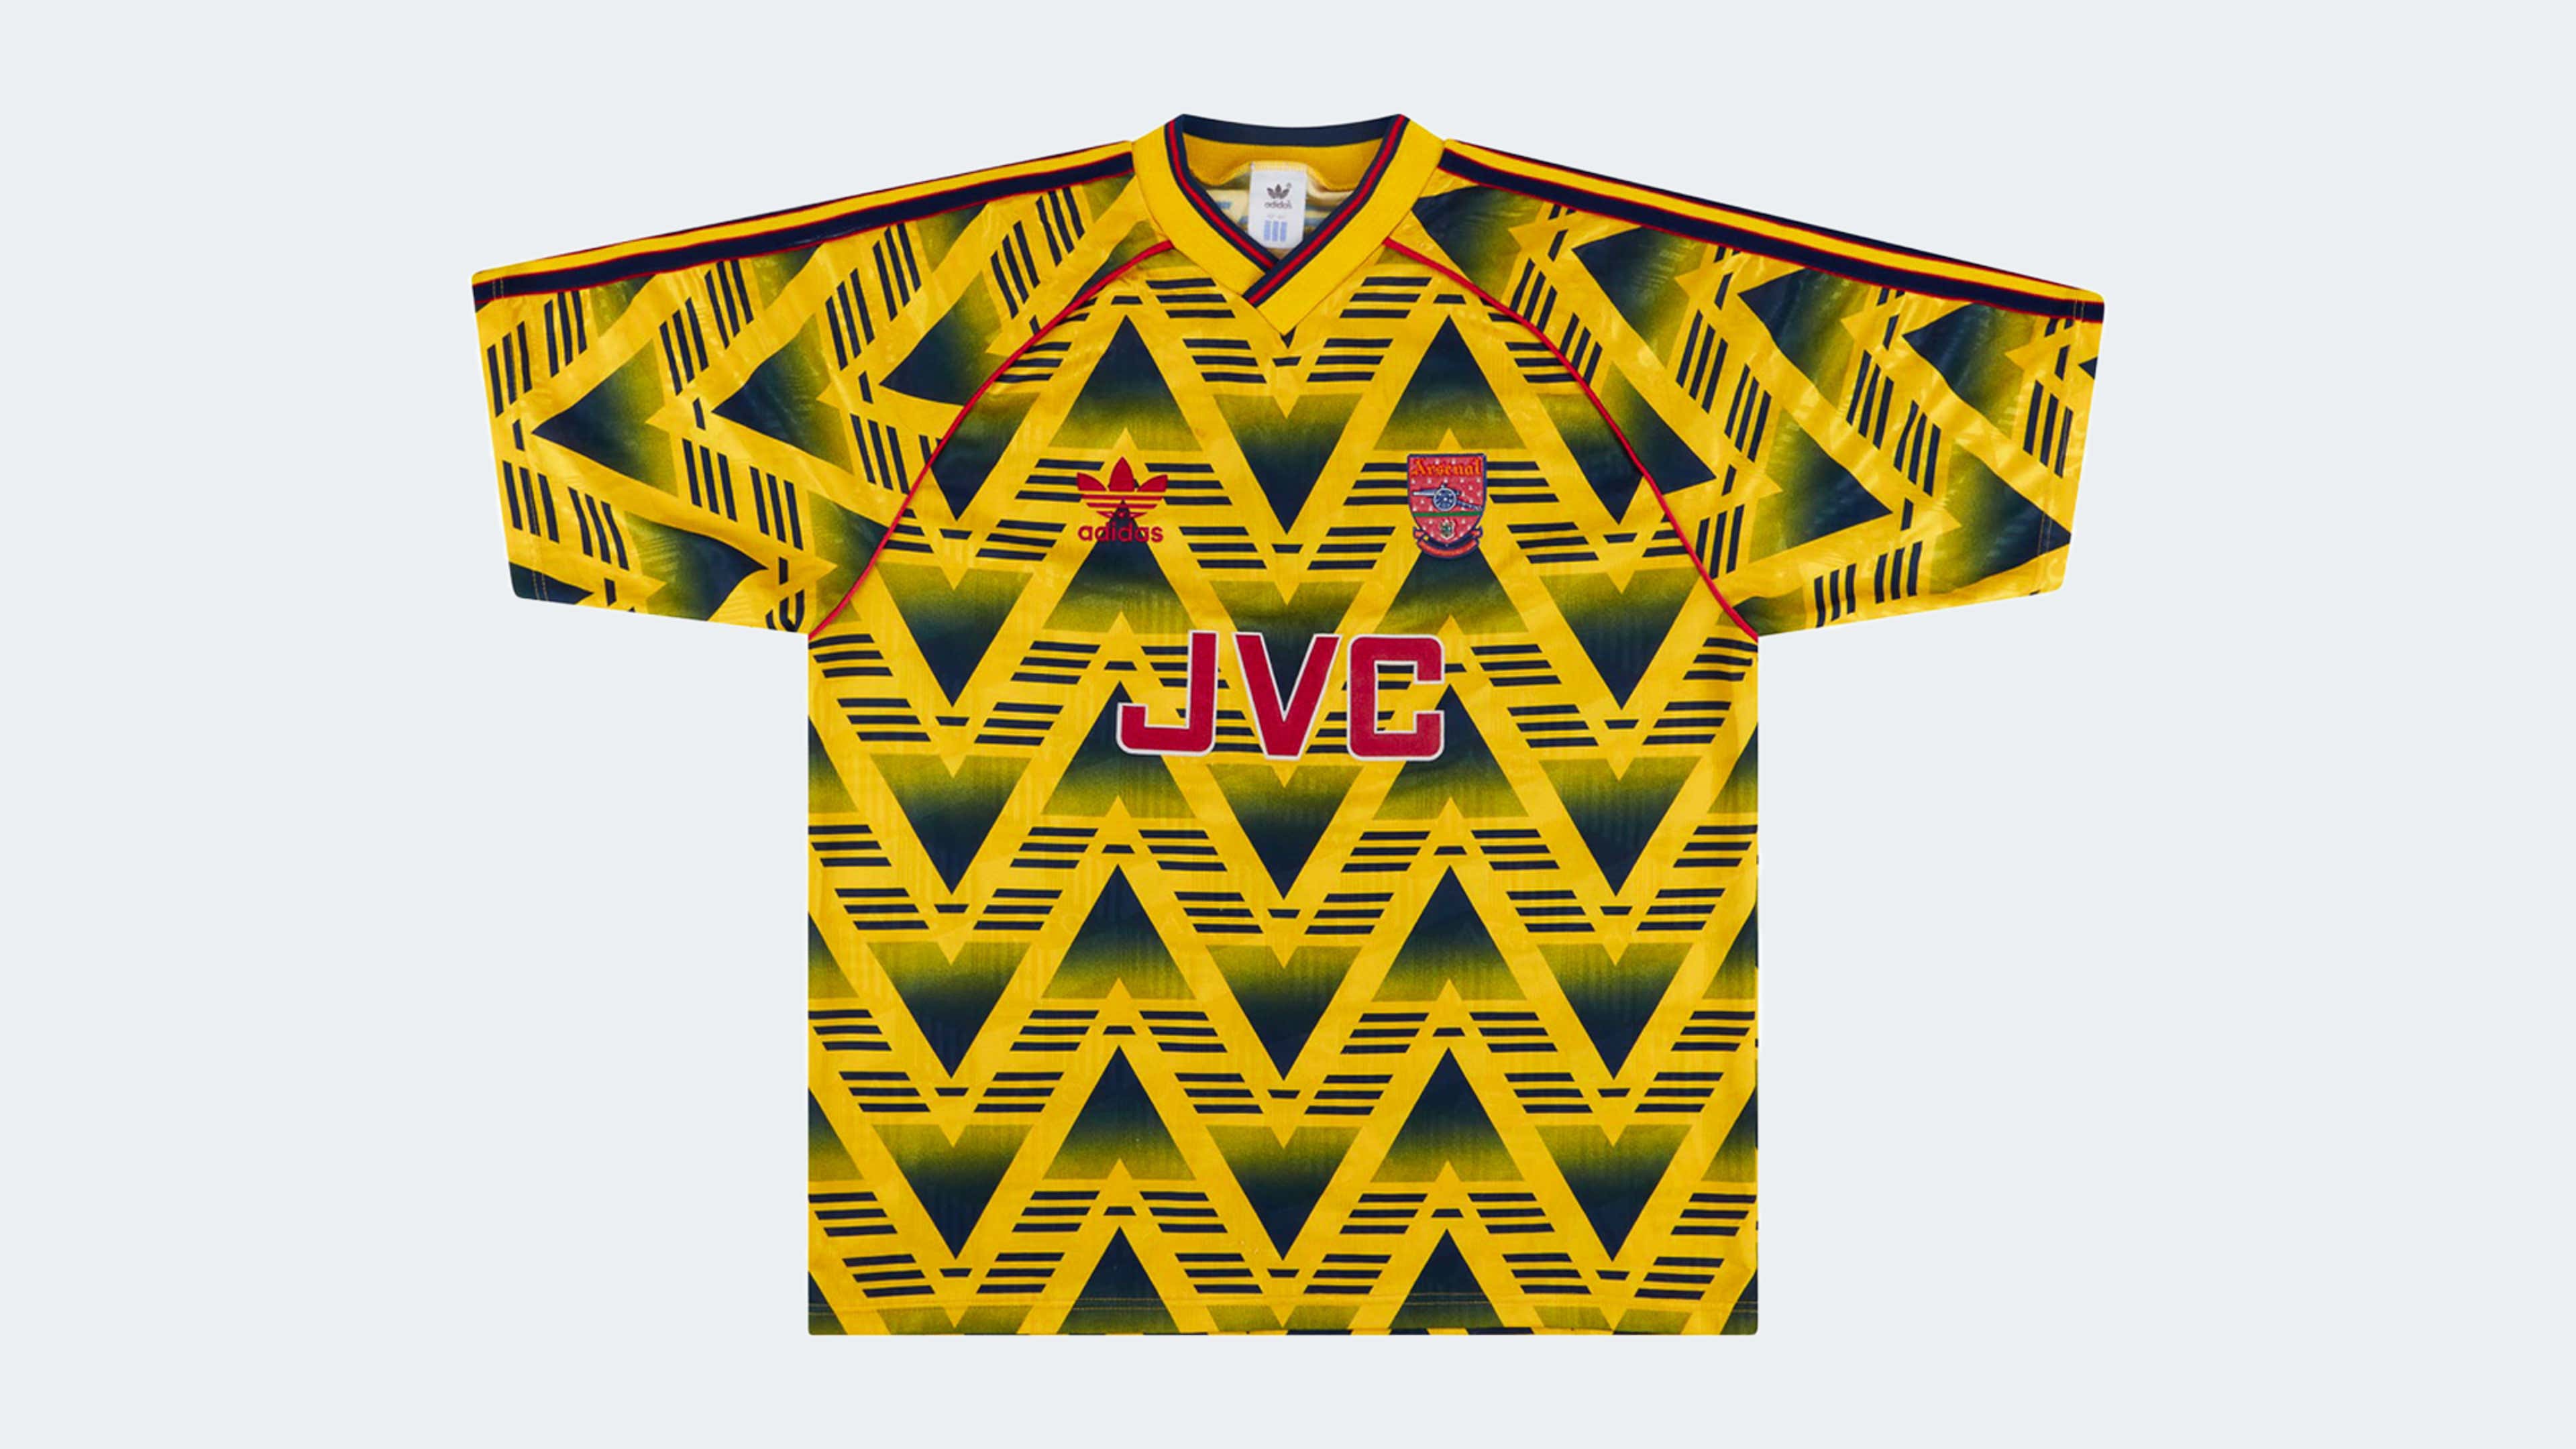 Arsenal 90/92 Adidas Retro Shirt - Football Shirt Culture - Latest Football  Kit News and More